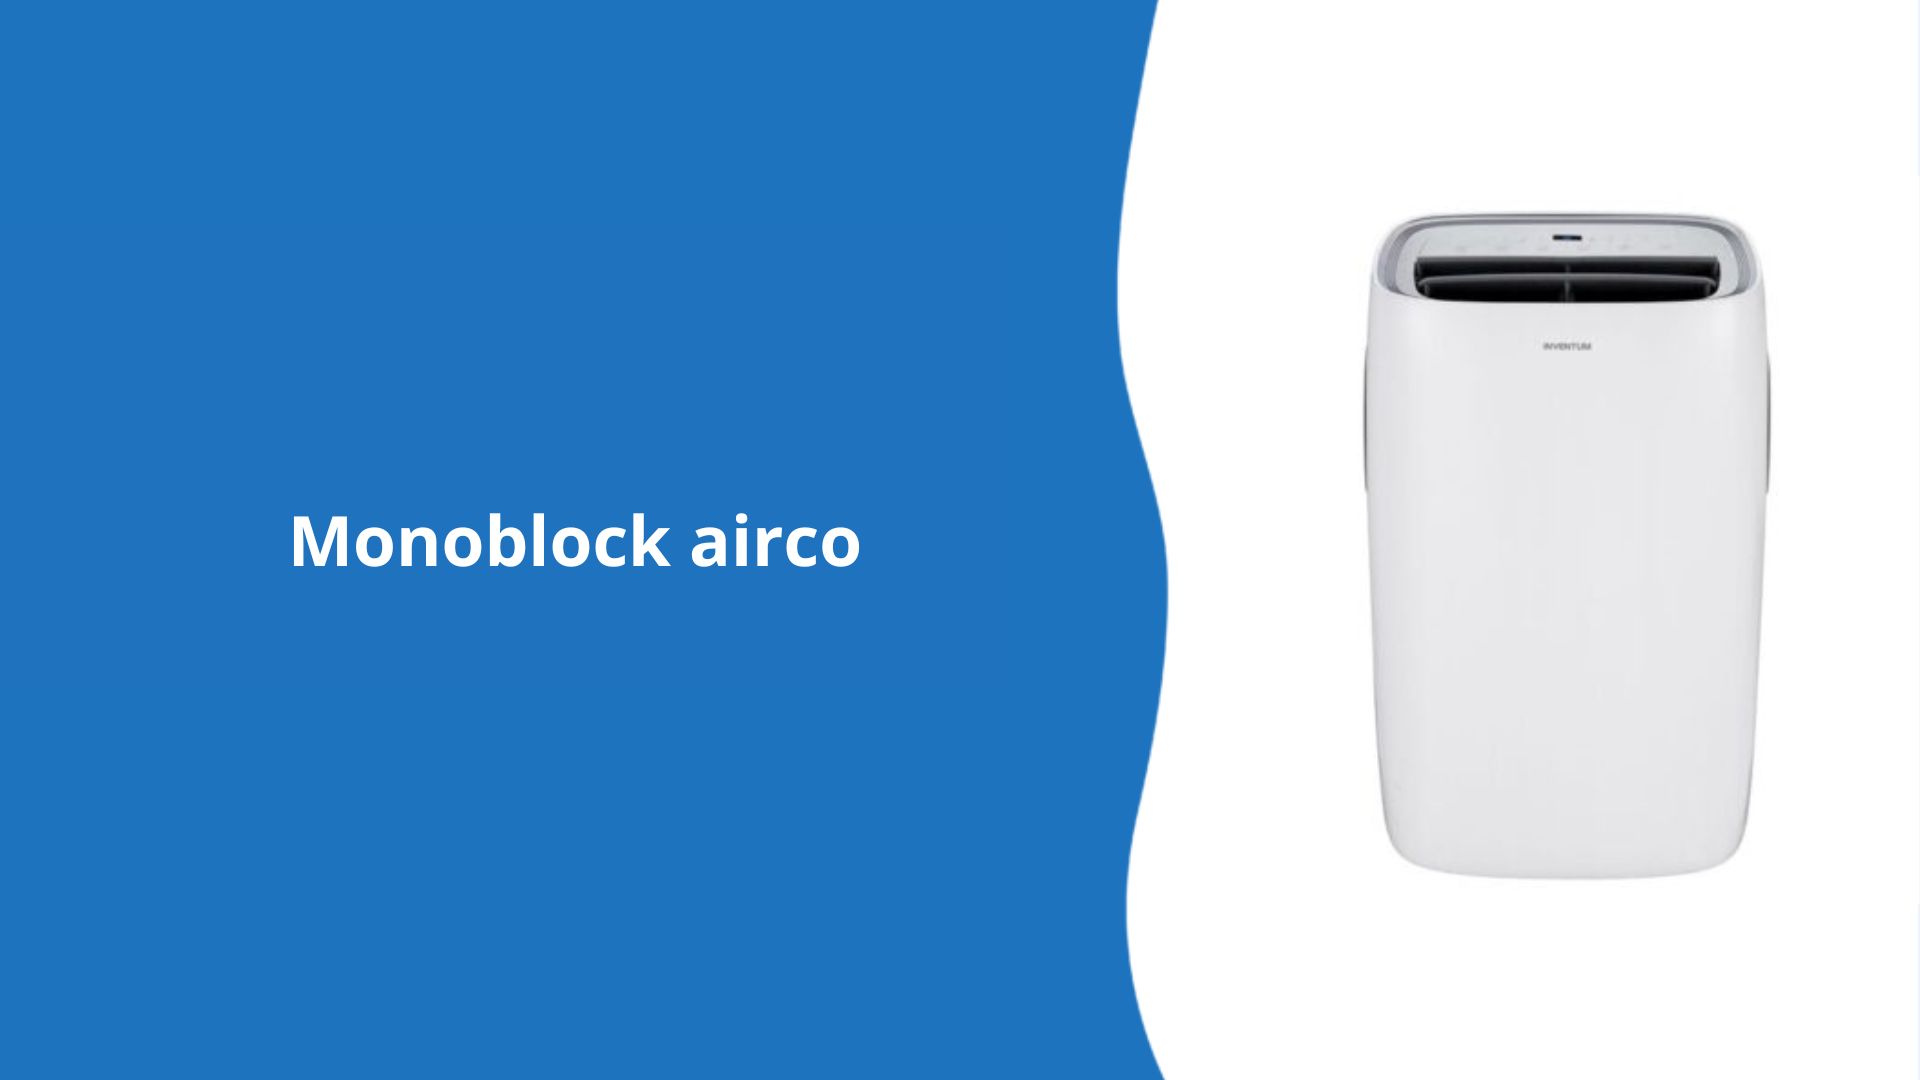 Monoblock airco